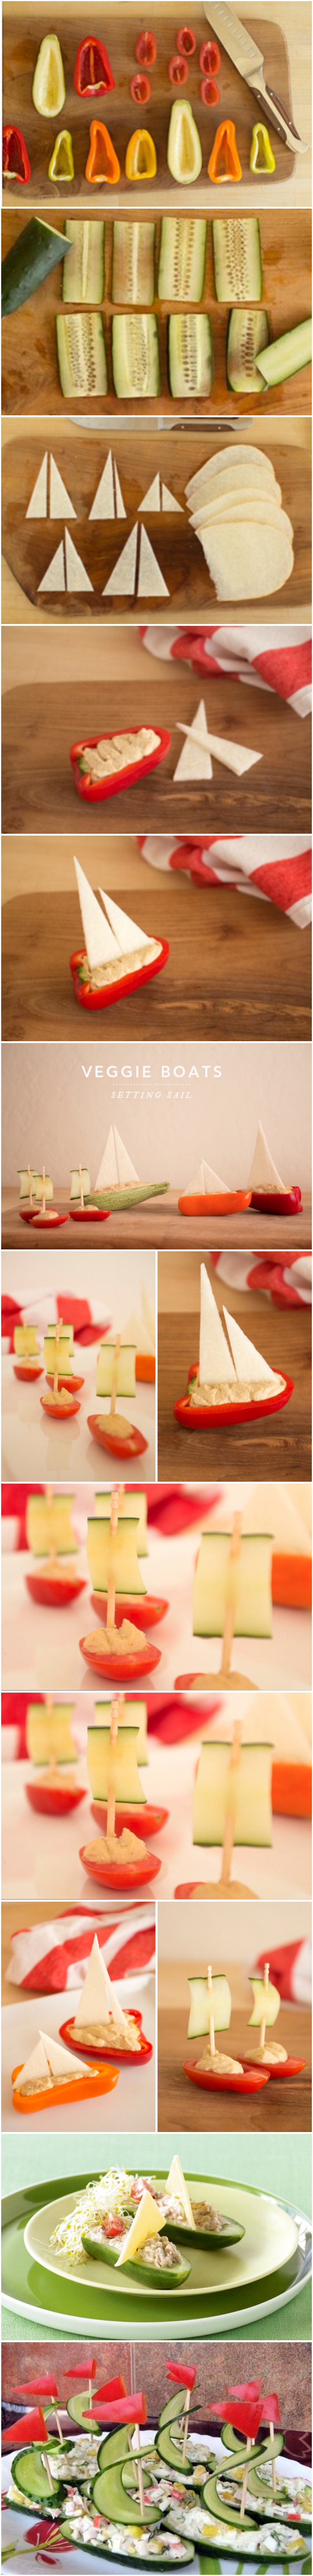 DIY Amazing Salad Decoration Vegetables Boat p